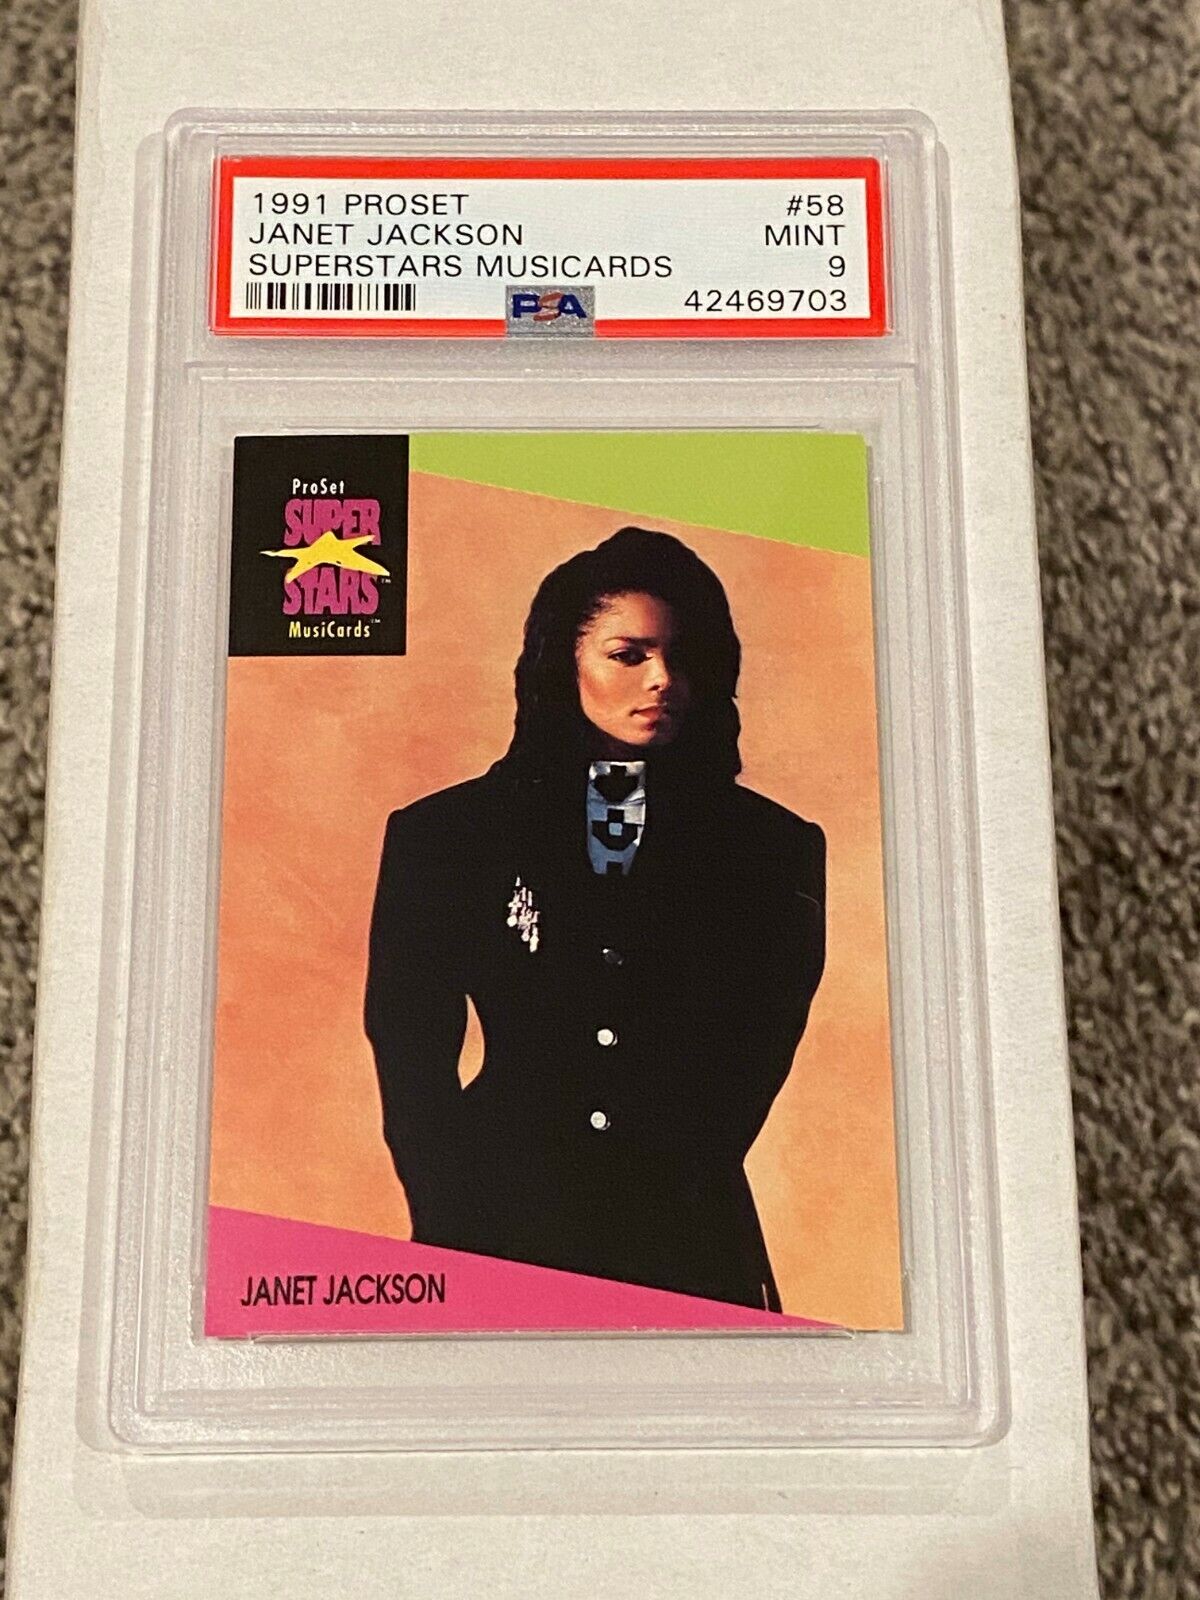 1991 ProSet Superstars MusiCards #58 - JANET JACKSON - PSA 9 Mint - pop1